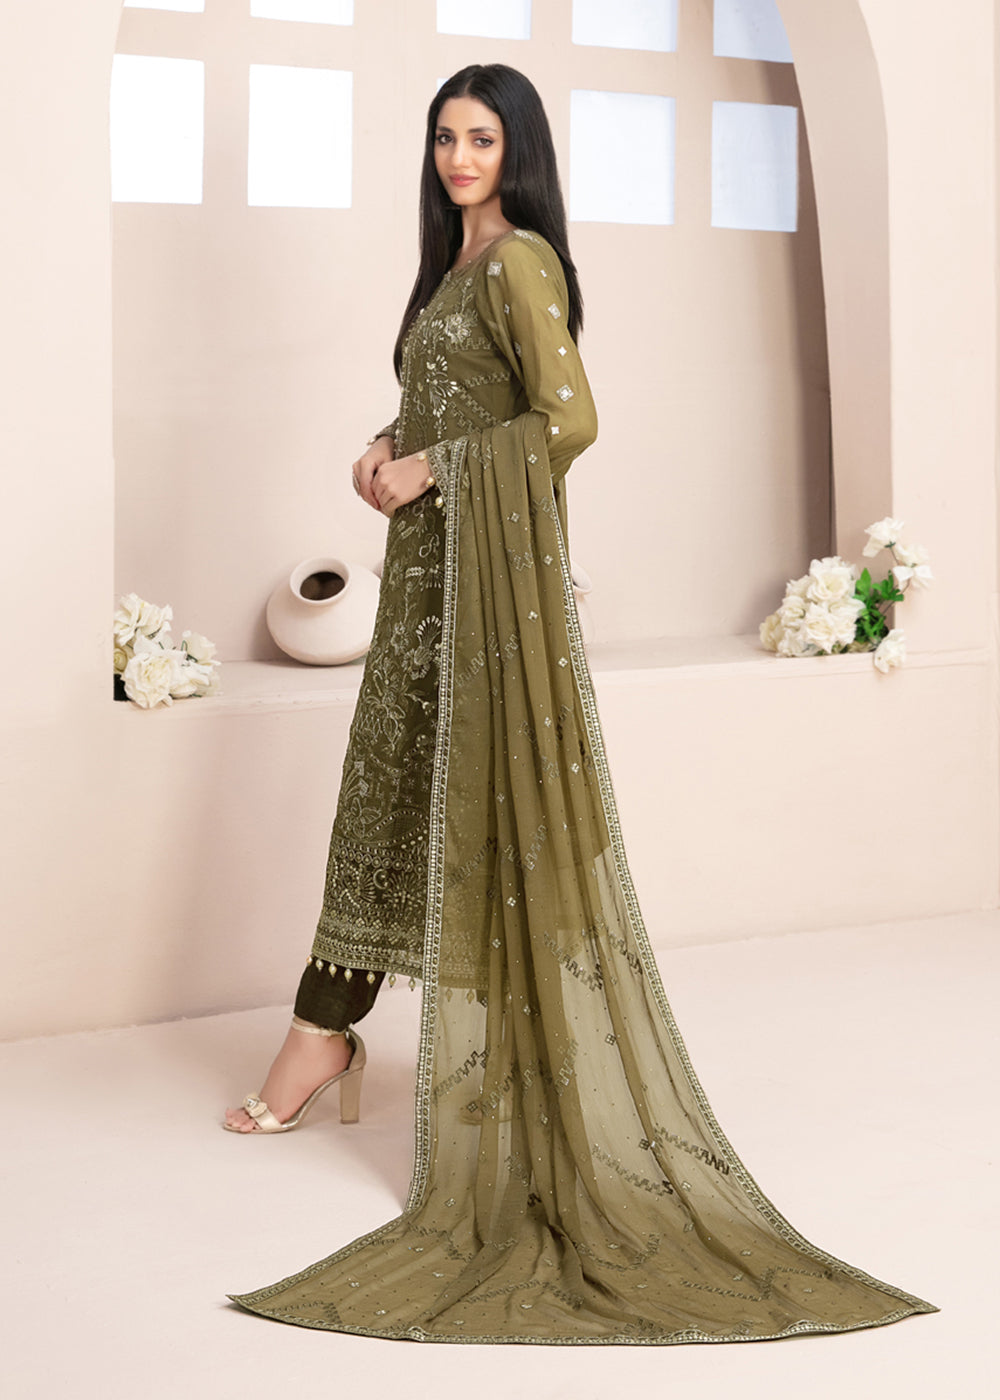 Buy Now Nayara Formal Wear 2023 by Tawakkal Fabrics - D-8682 Online in USA, UK, Canada & Worldwide at Empress Clothing.